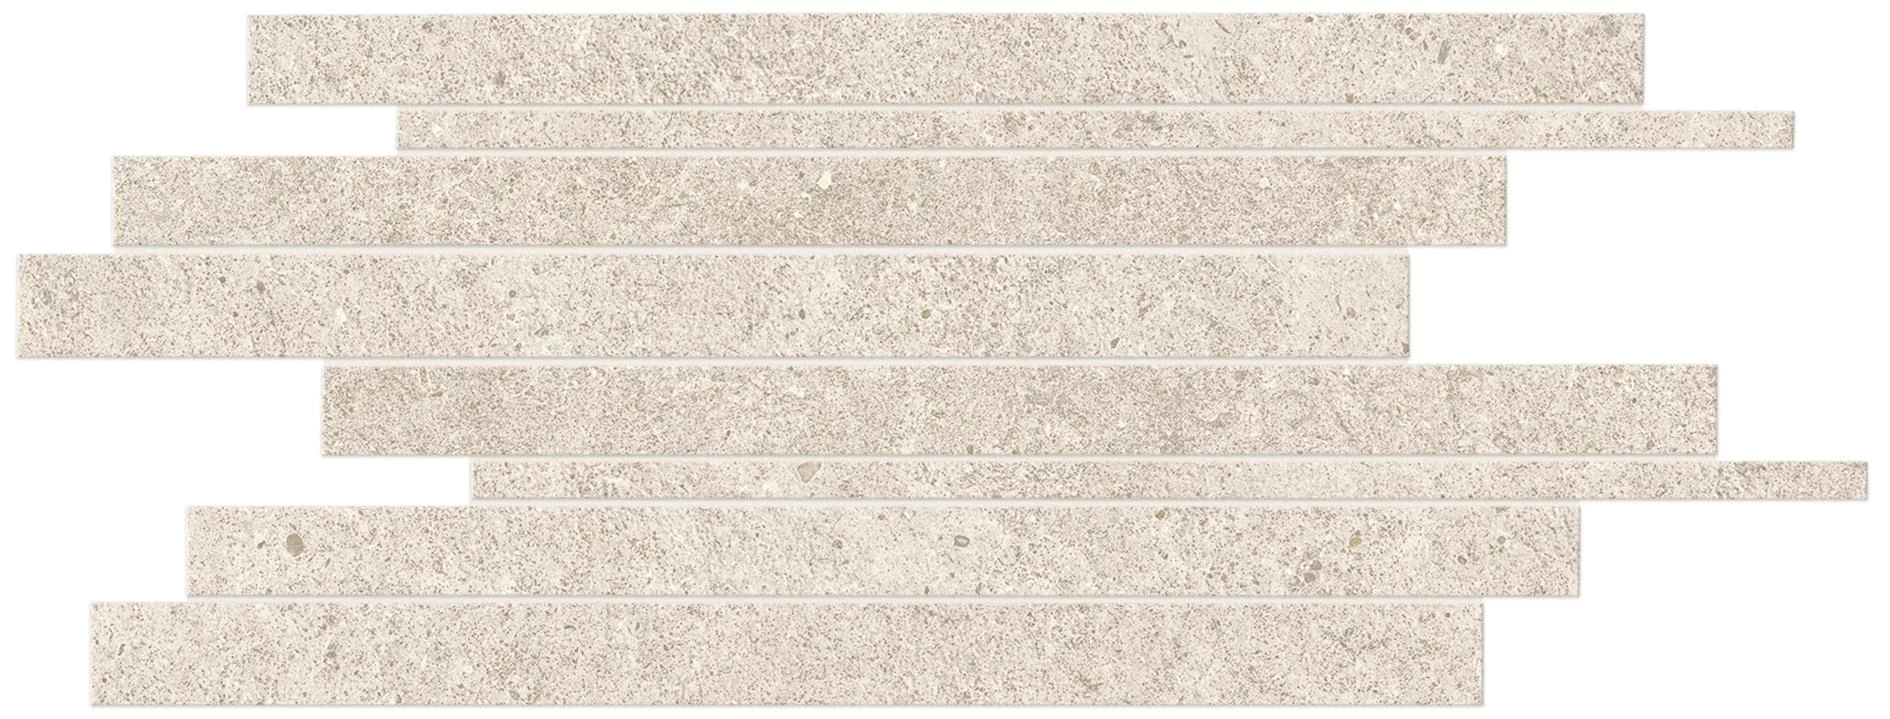 A7C3 Напольная Boost Stone White Mosaico Brick 30x60